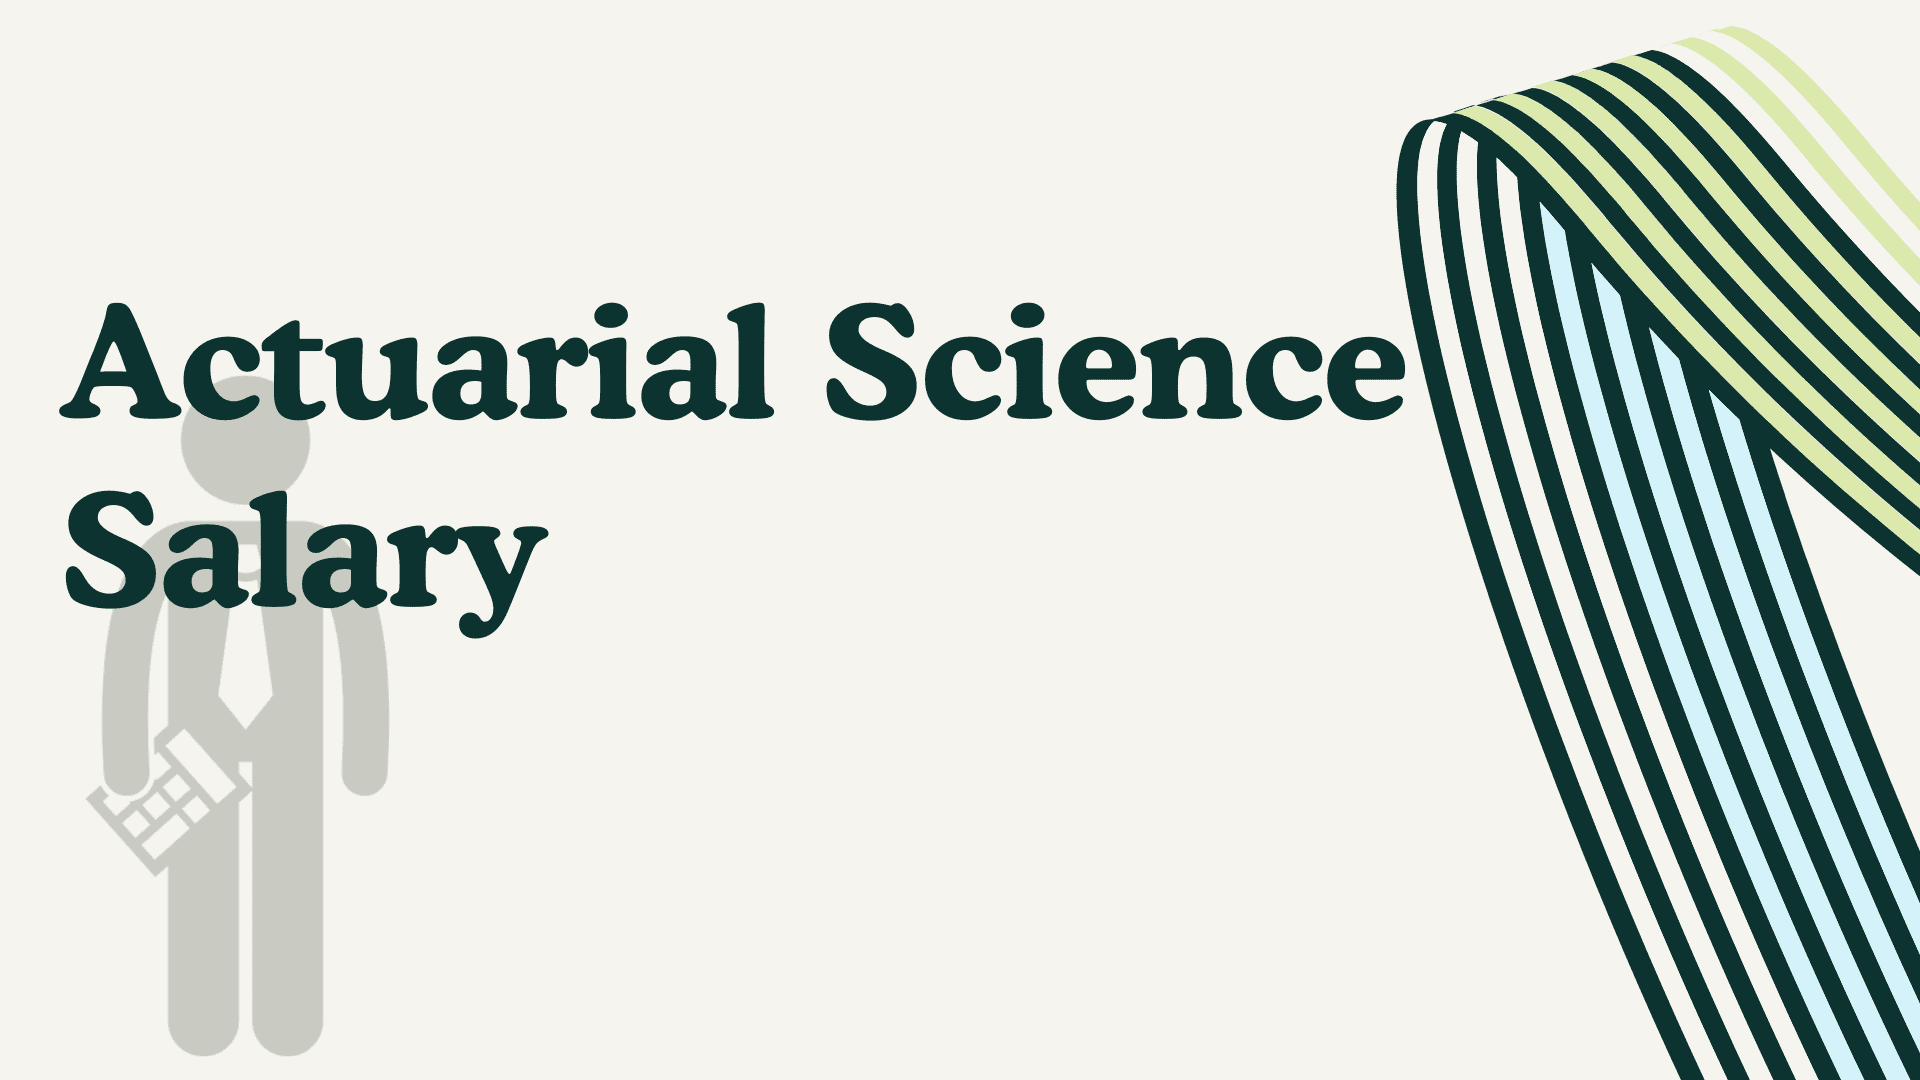 Actuarial Science Salary